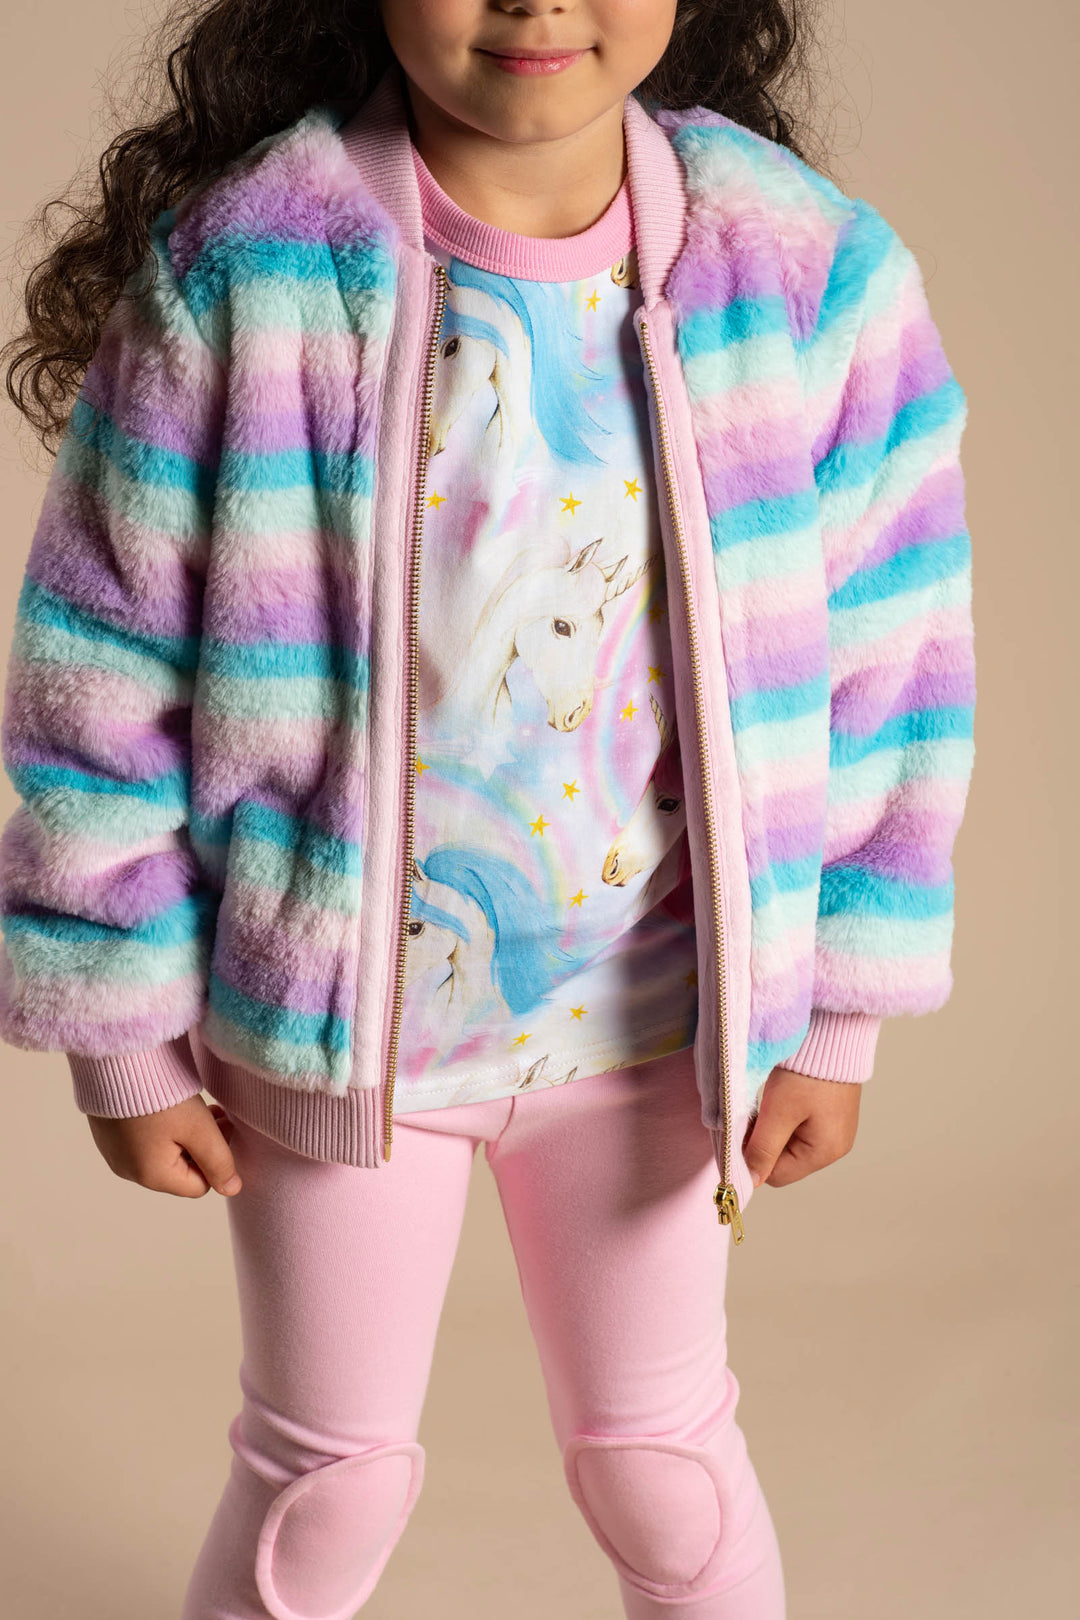 Rock Your Baby Pastel Stripe Faux Fur Jacket